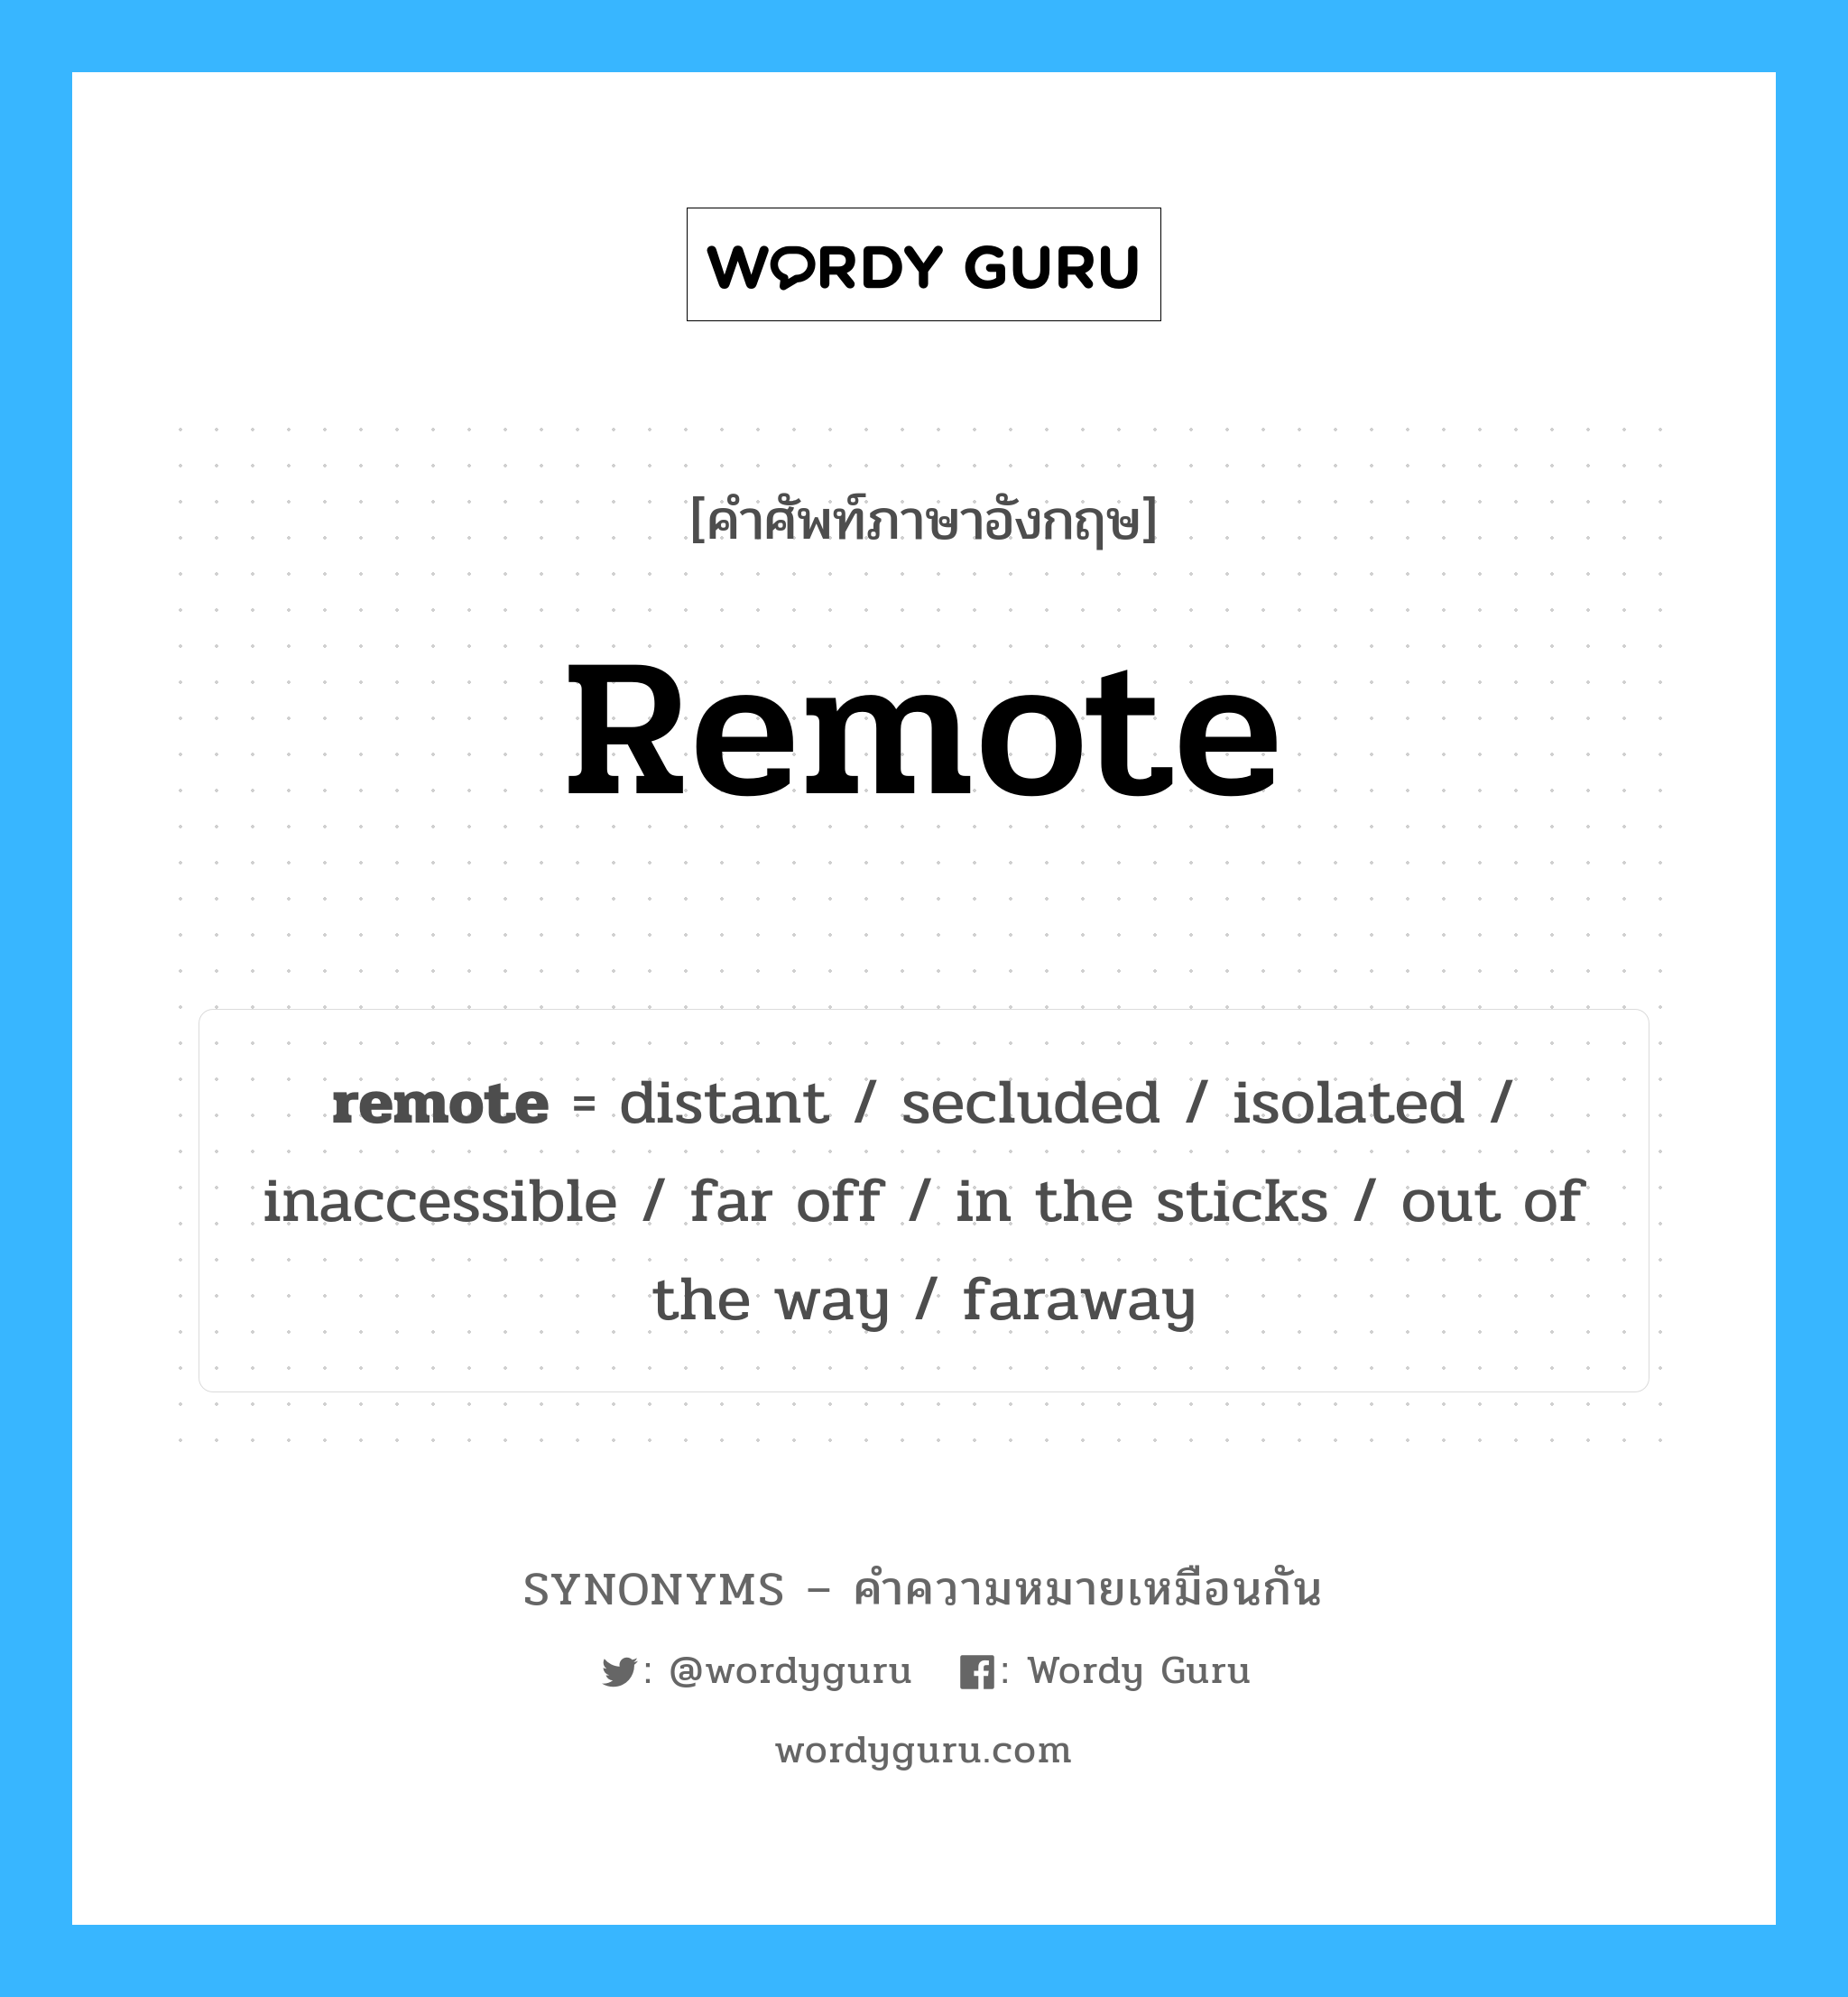 secluded เป็นหนึ่งใน remote และมีคำอื่น ๆ อีกดังนี้, คำศัพท์ภาษาอังกฤษ secluded ความหมายคล้ายกันกับ remote แปลว่า เงียบสงบ หมวด remote